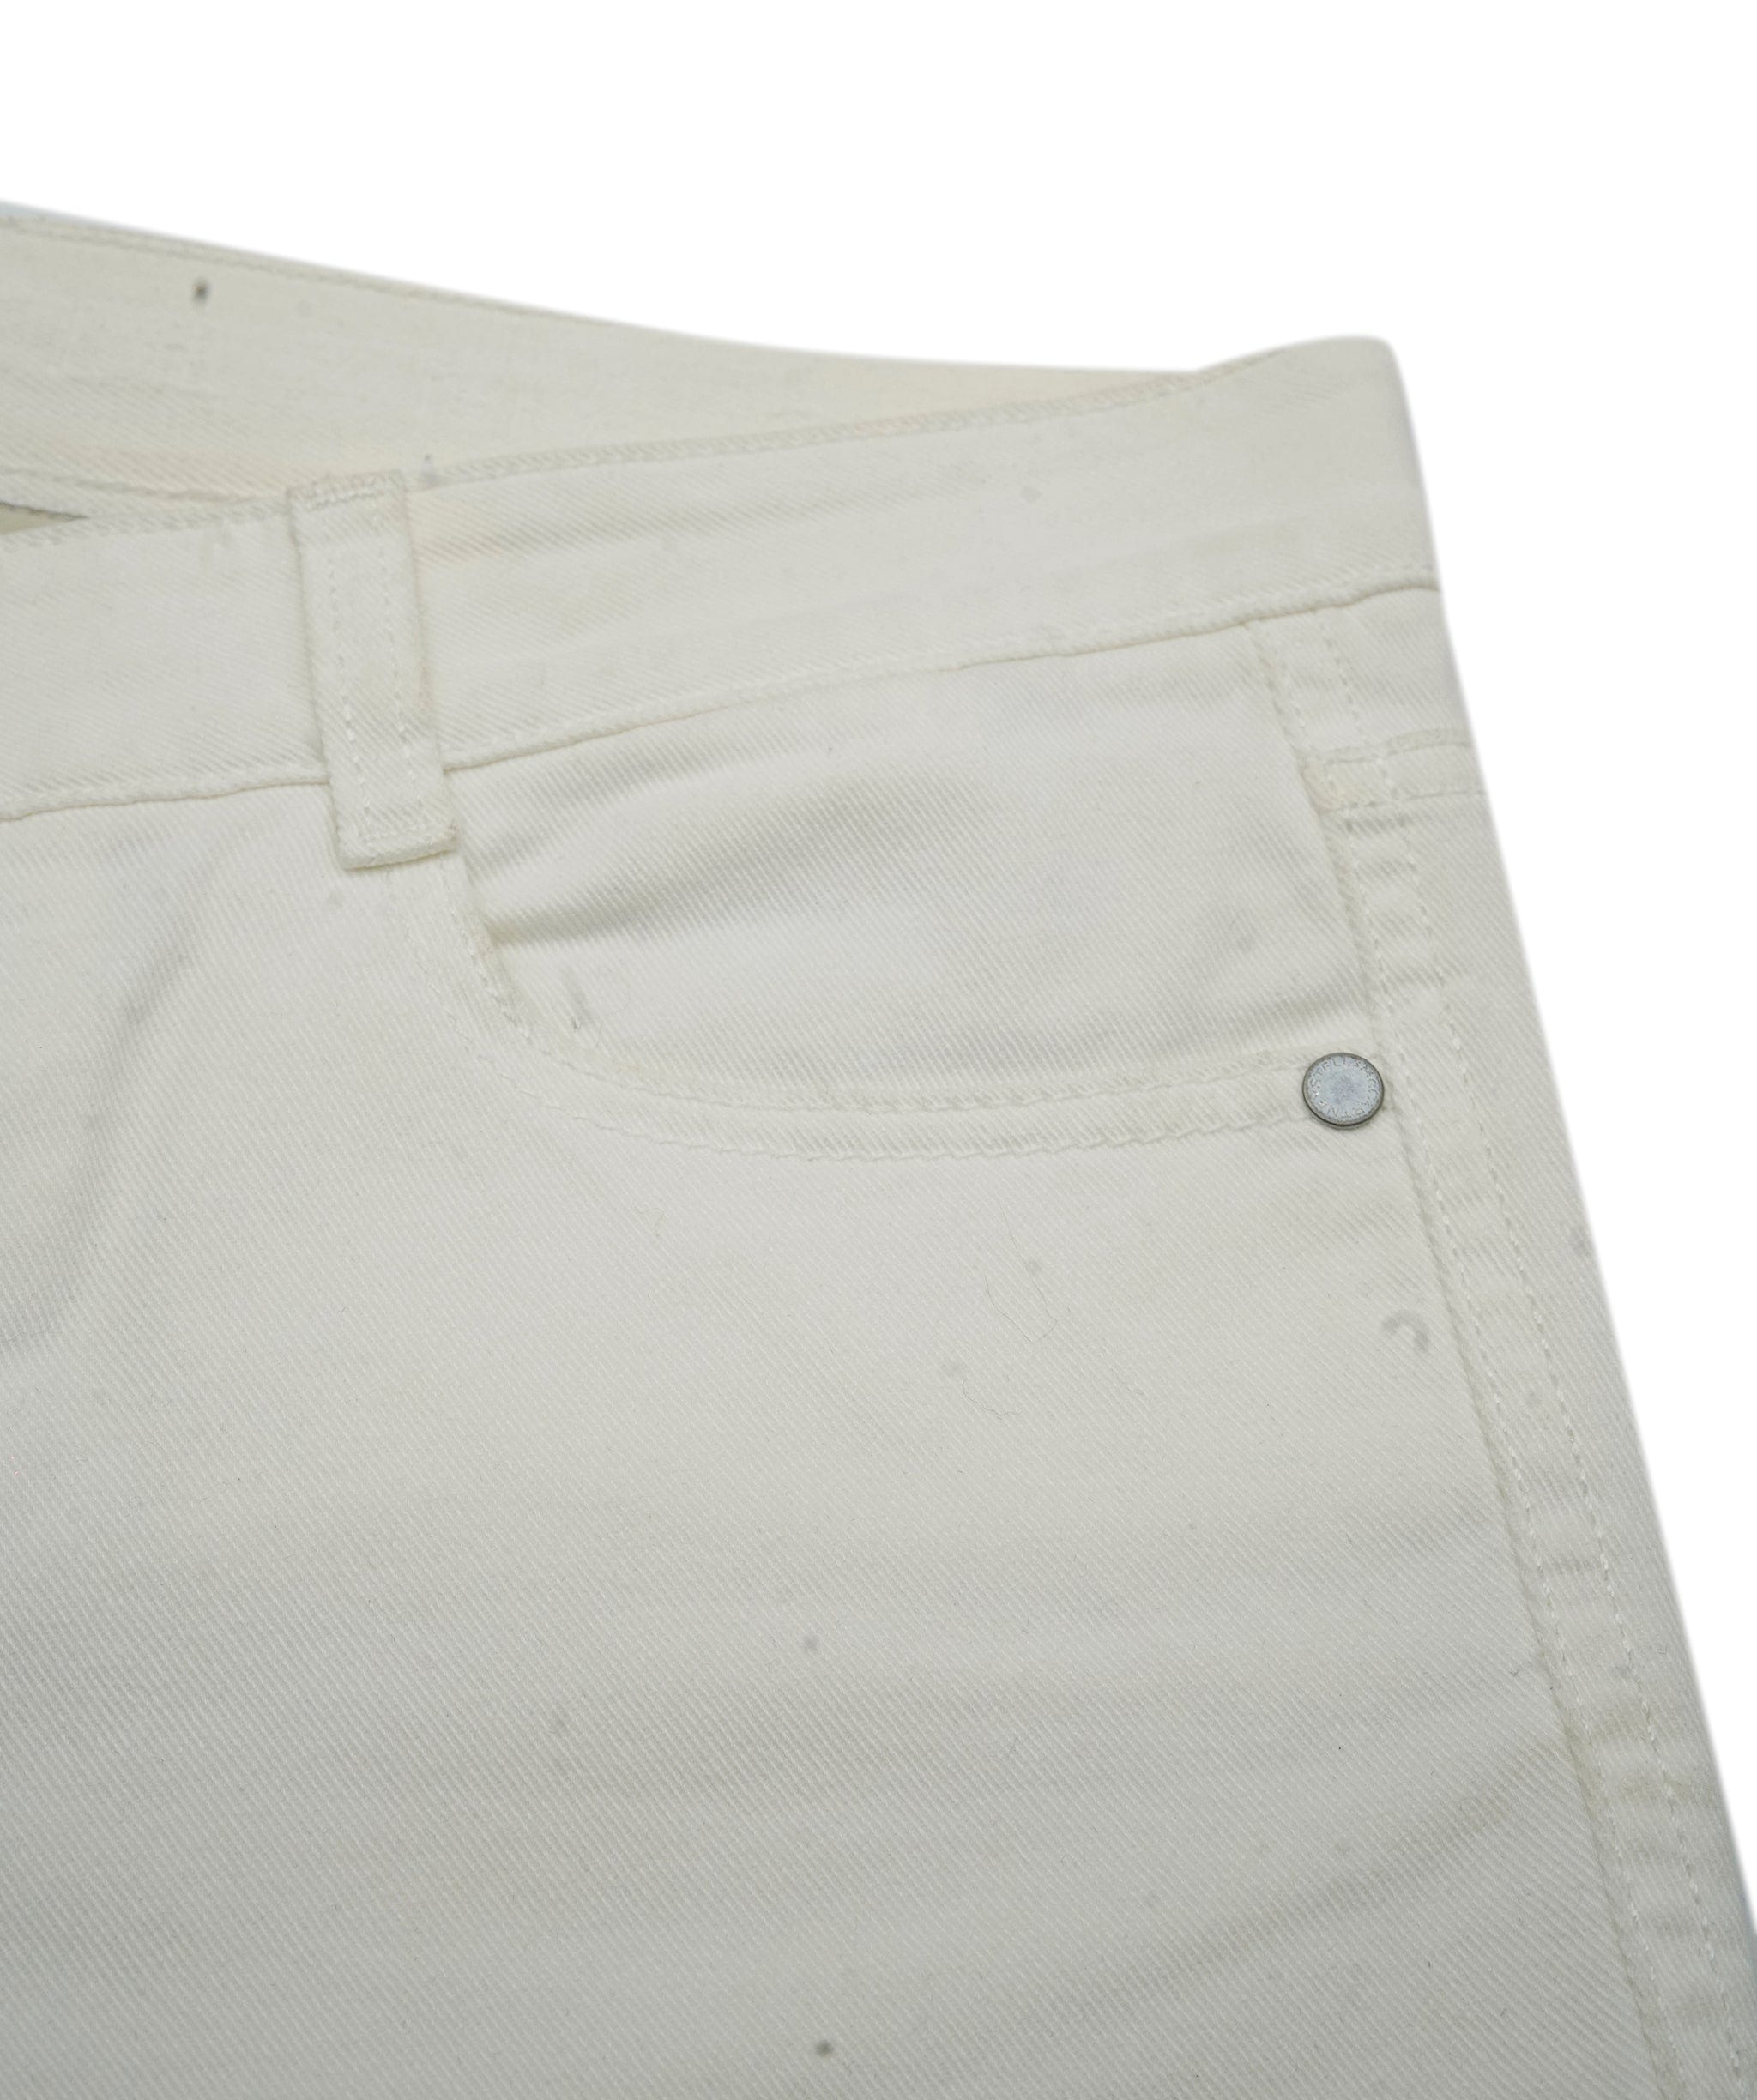 Stella McCartney Stella McCartney white skinny jeans size 27 AEL1120